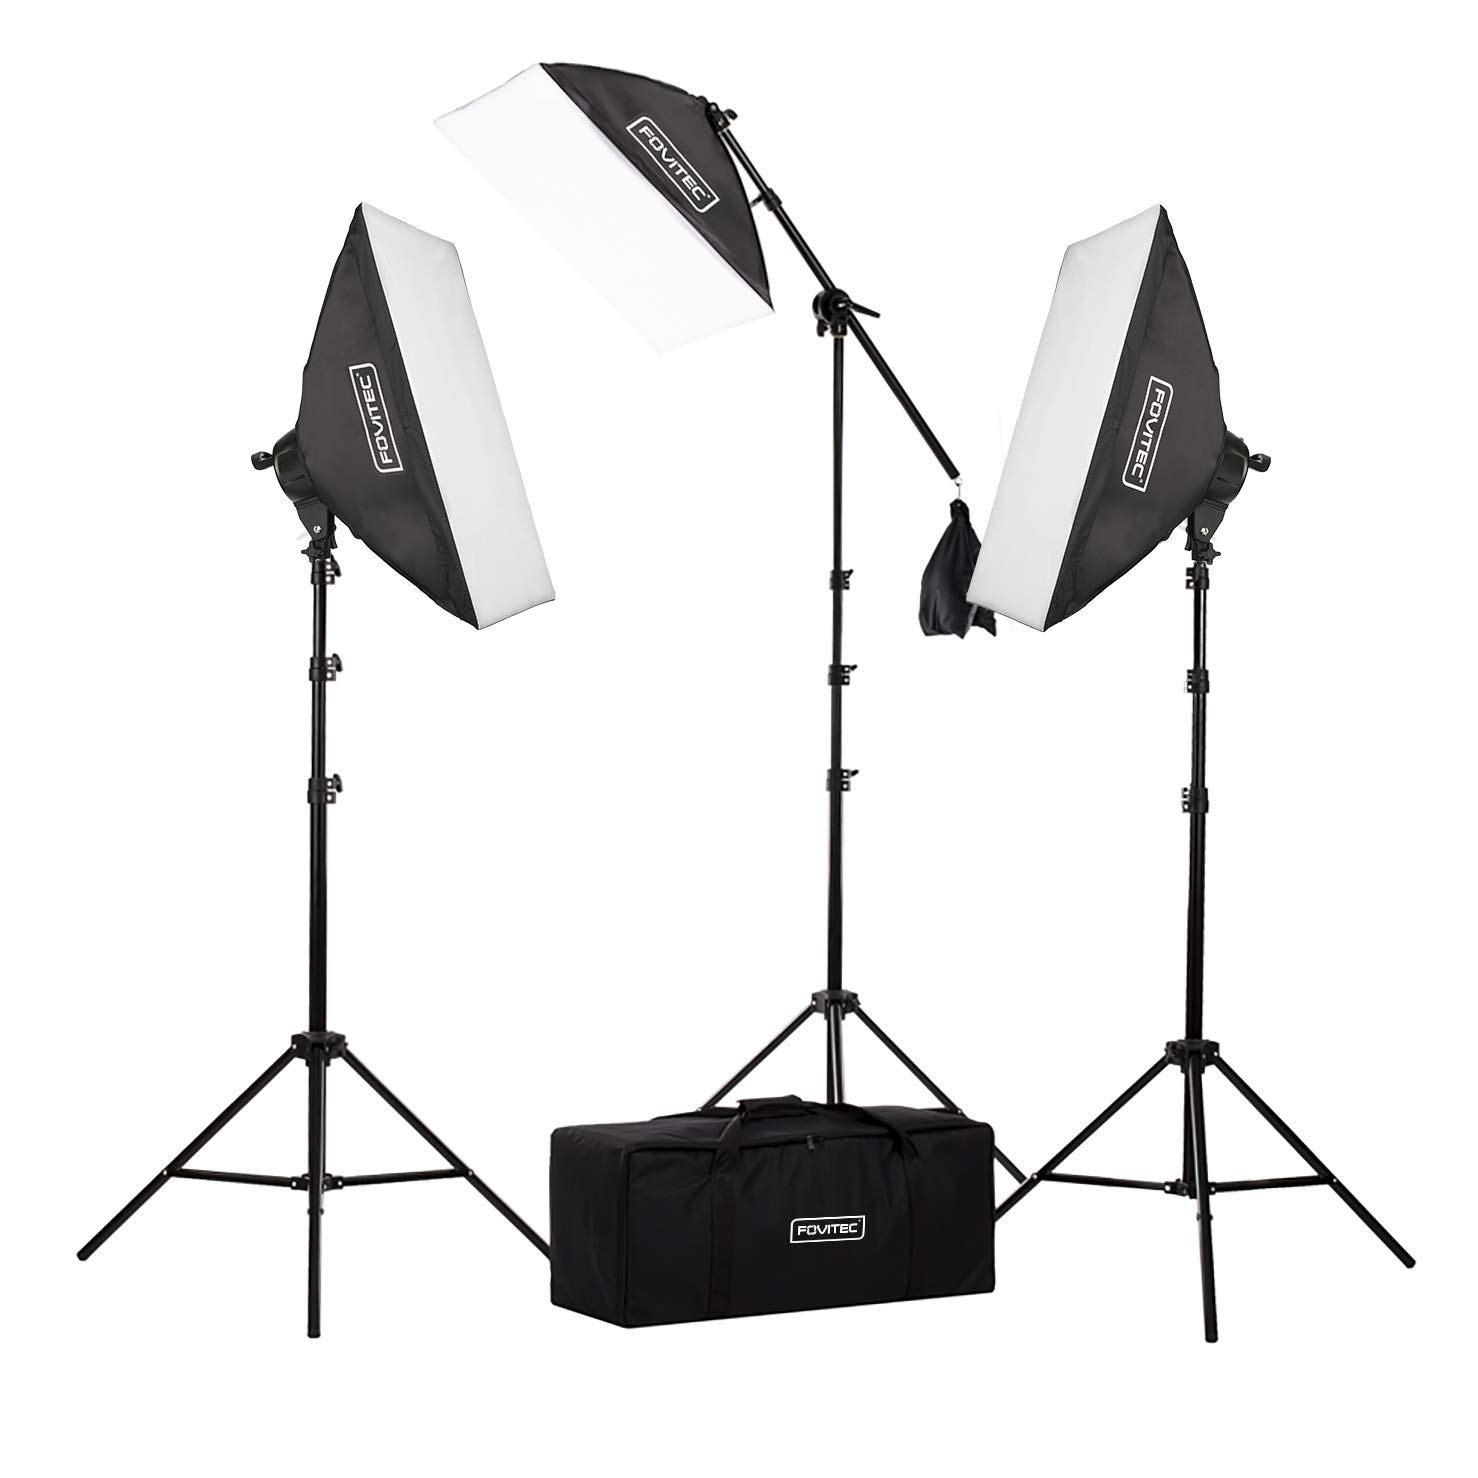 Fovitec 3-Light Fluorescent Studio Lighting Kit w/ Boom arm, 20"x28" Softboxes, 11 45W Bulbs, Light Stands, & Carry Case for Portraits, Pro...